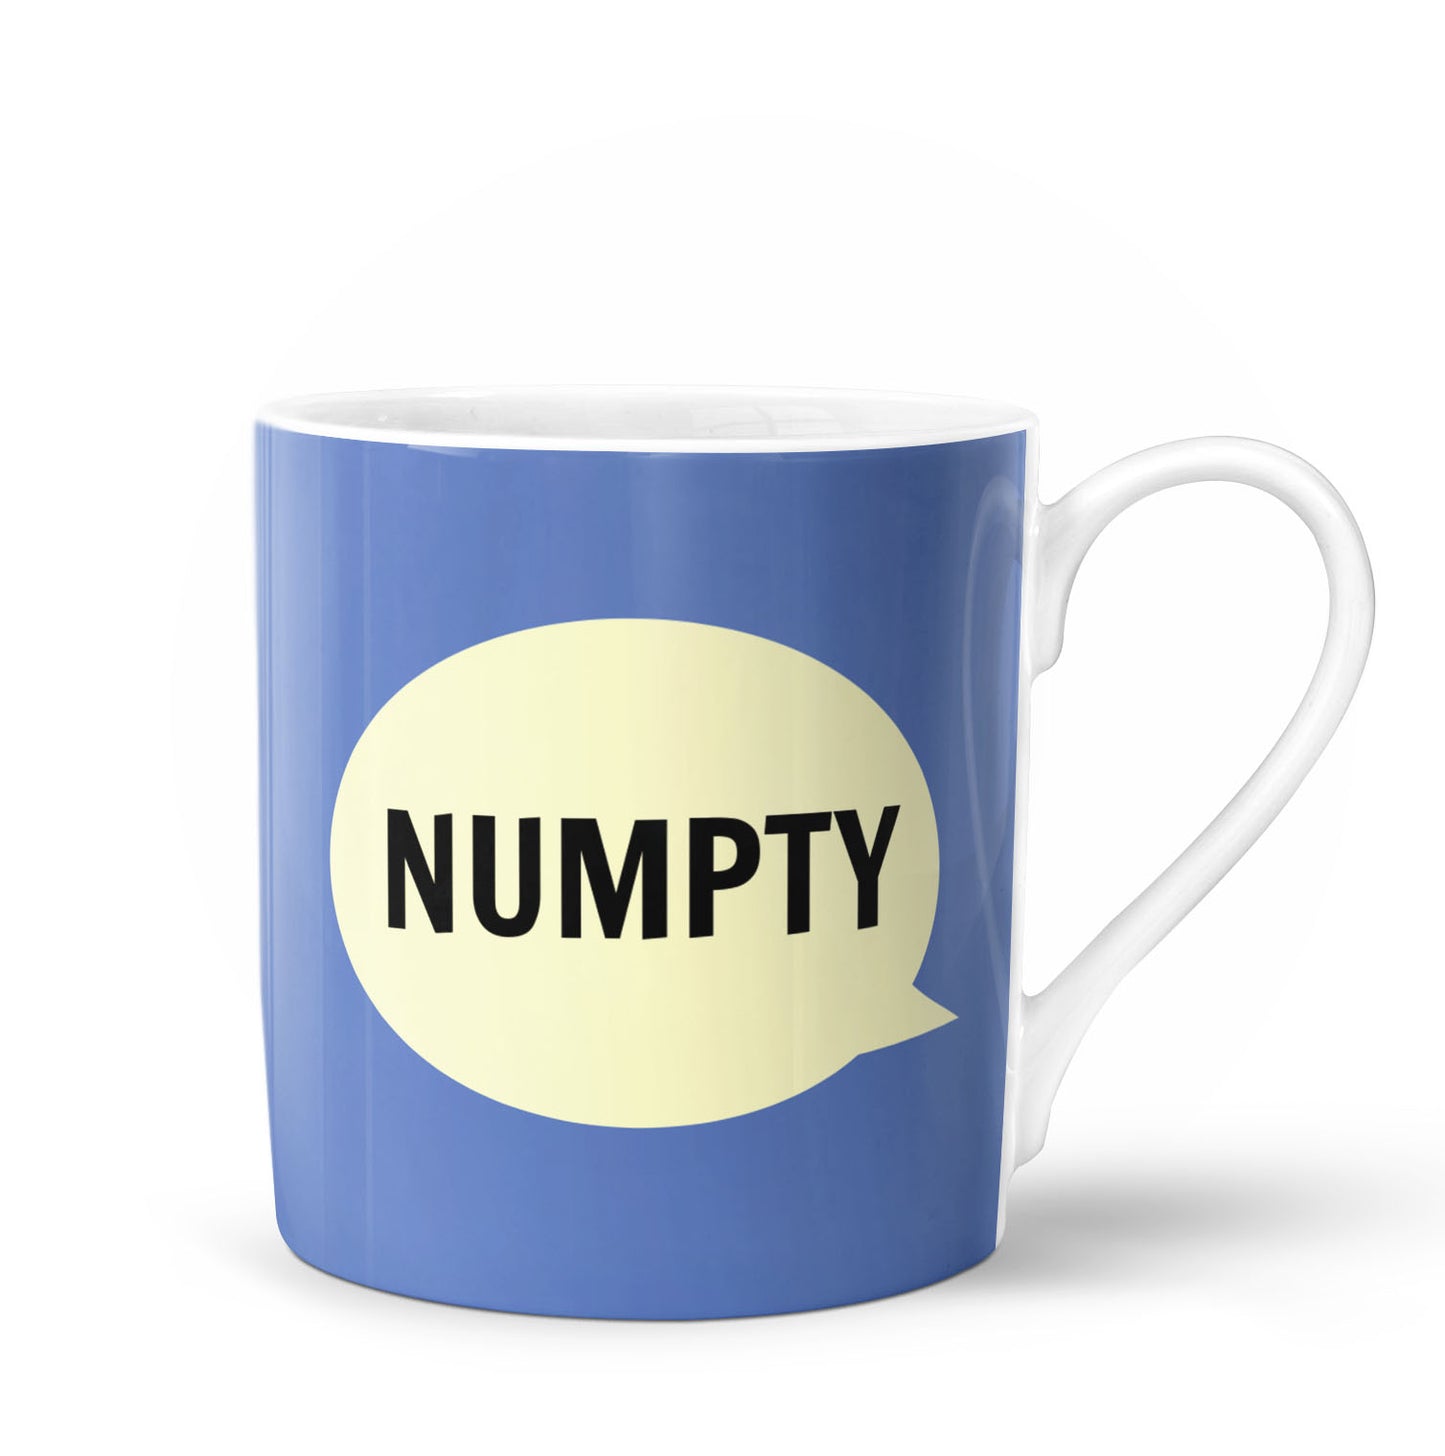 Numpty Bone China Mug - The Great Yorkshire Shop